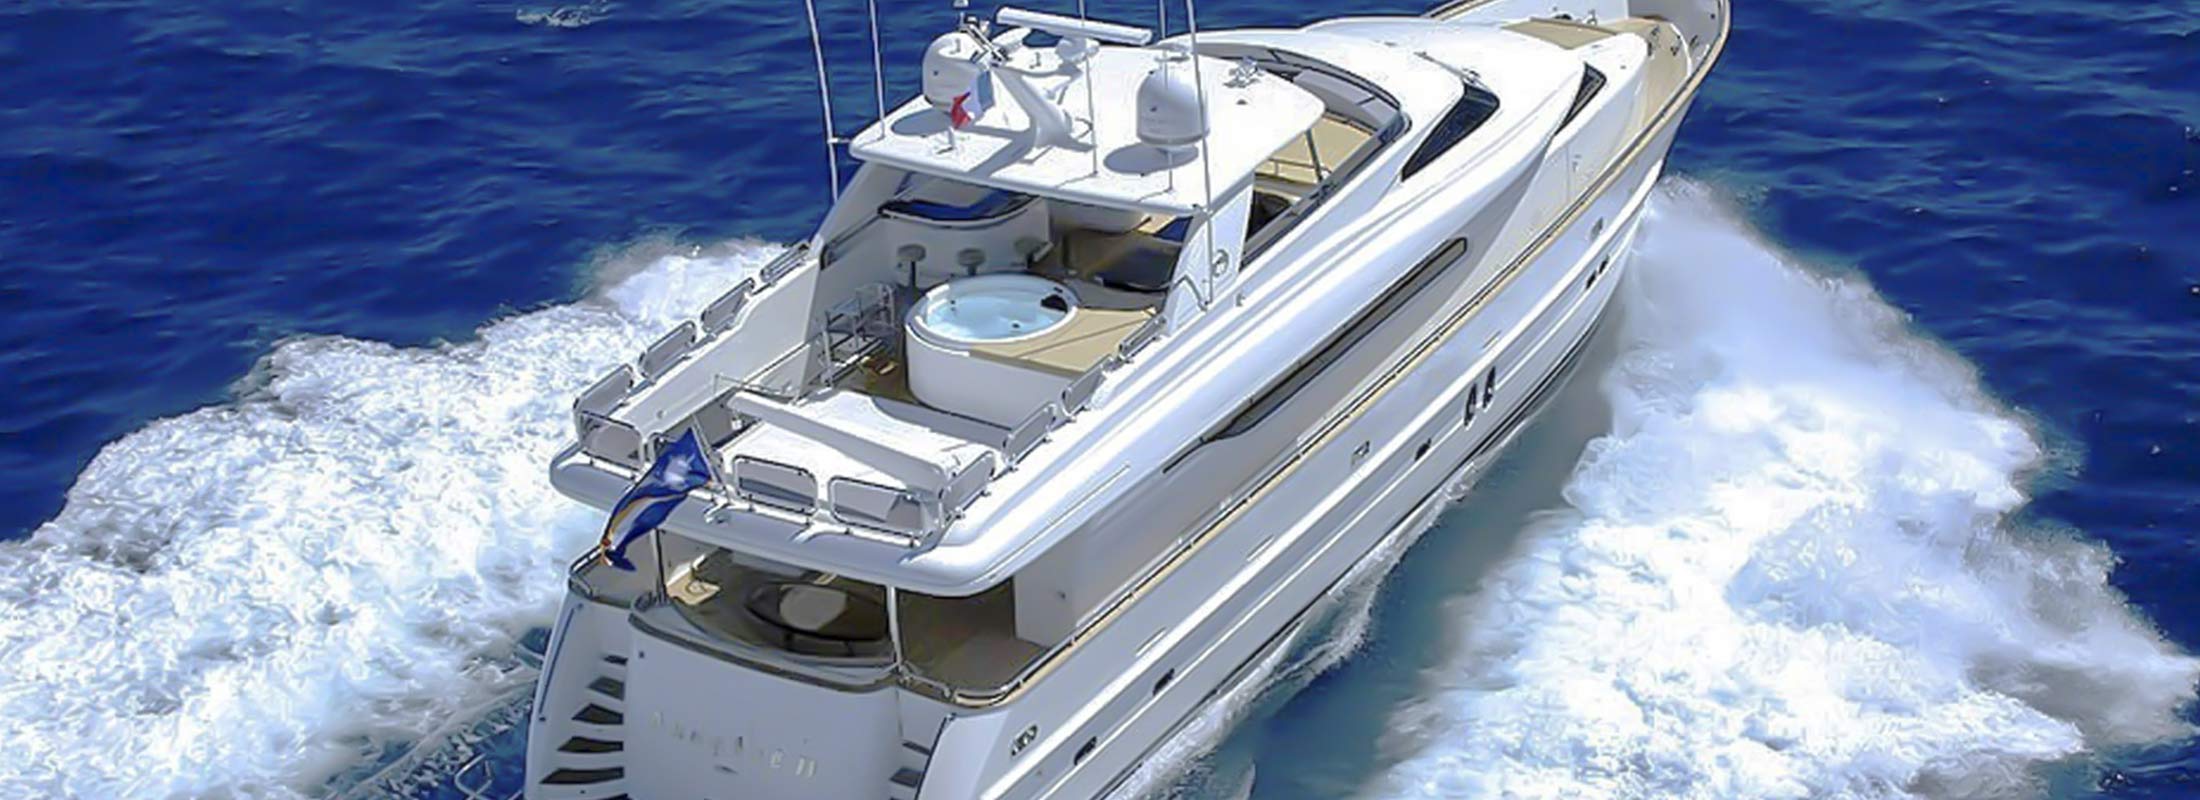 ANNABEL II Motor Yacht for Charter Mediterranean slider 2